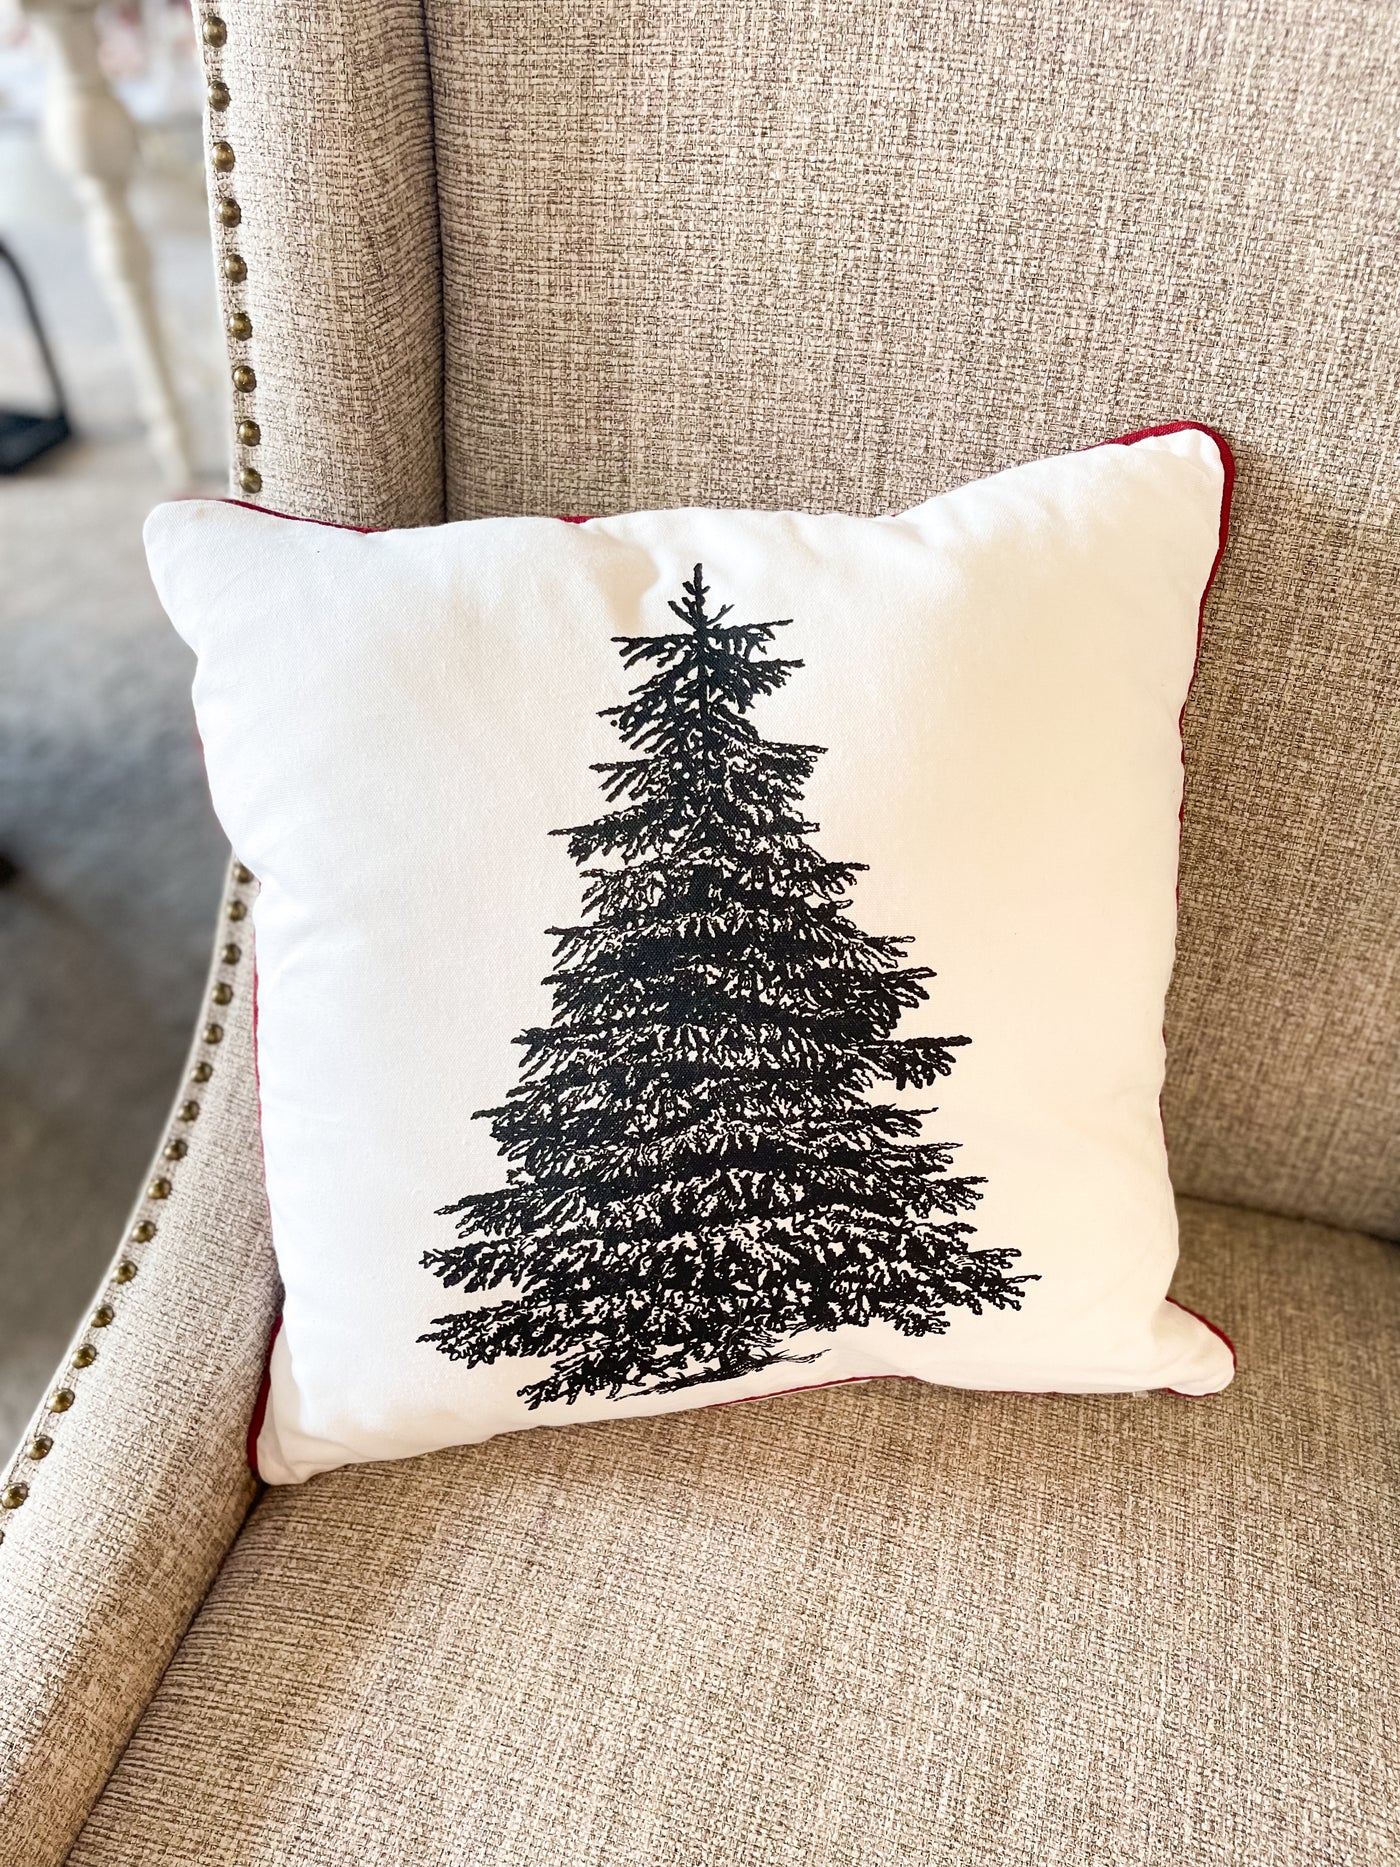 B&W Christmas Tree Pillow